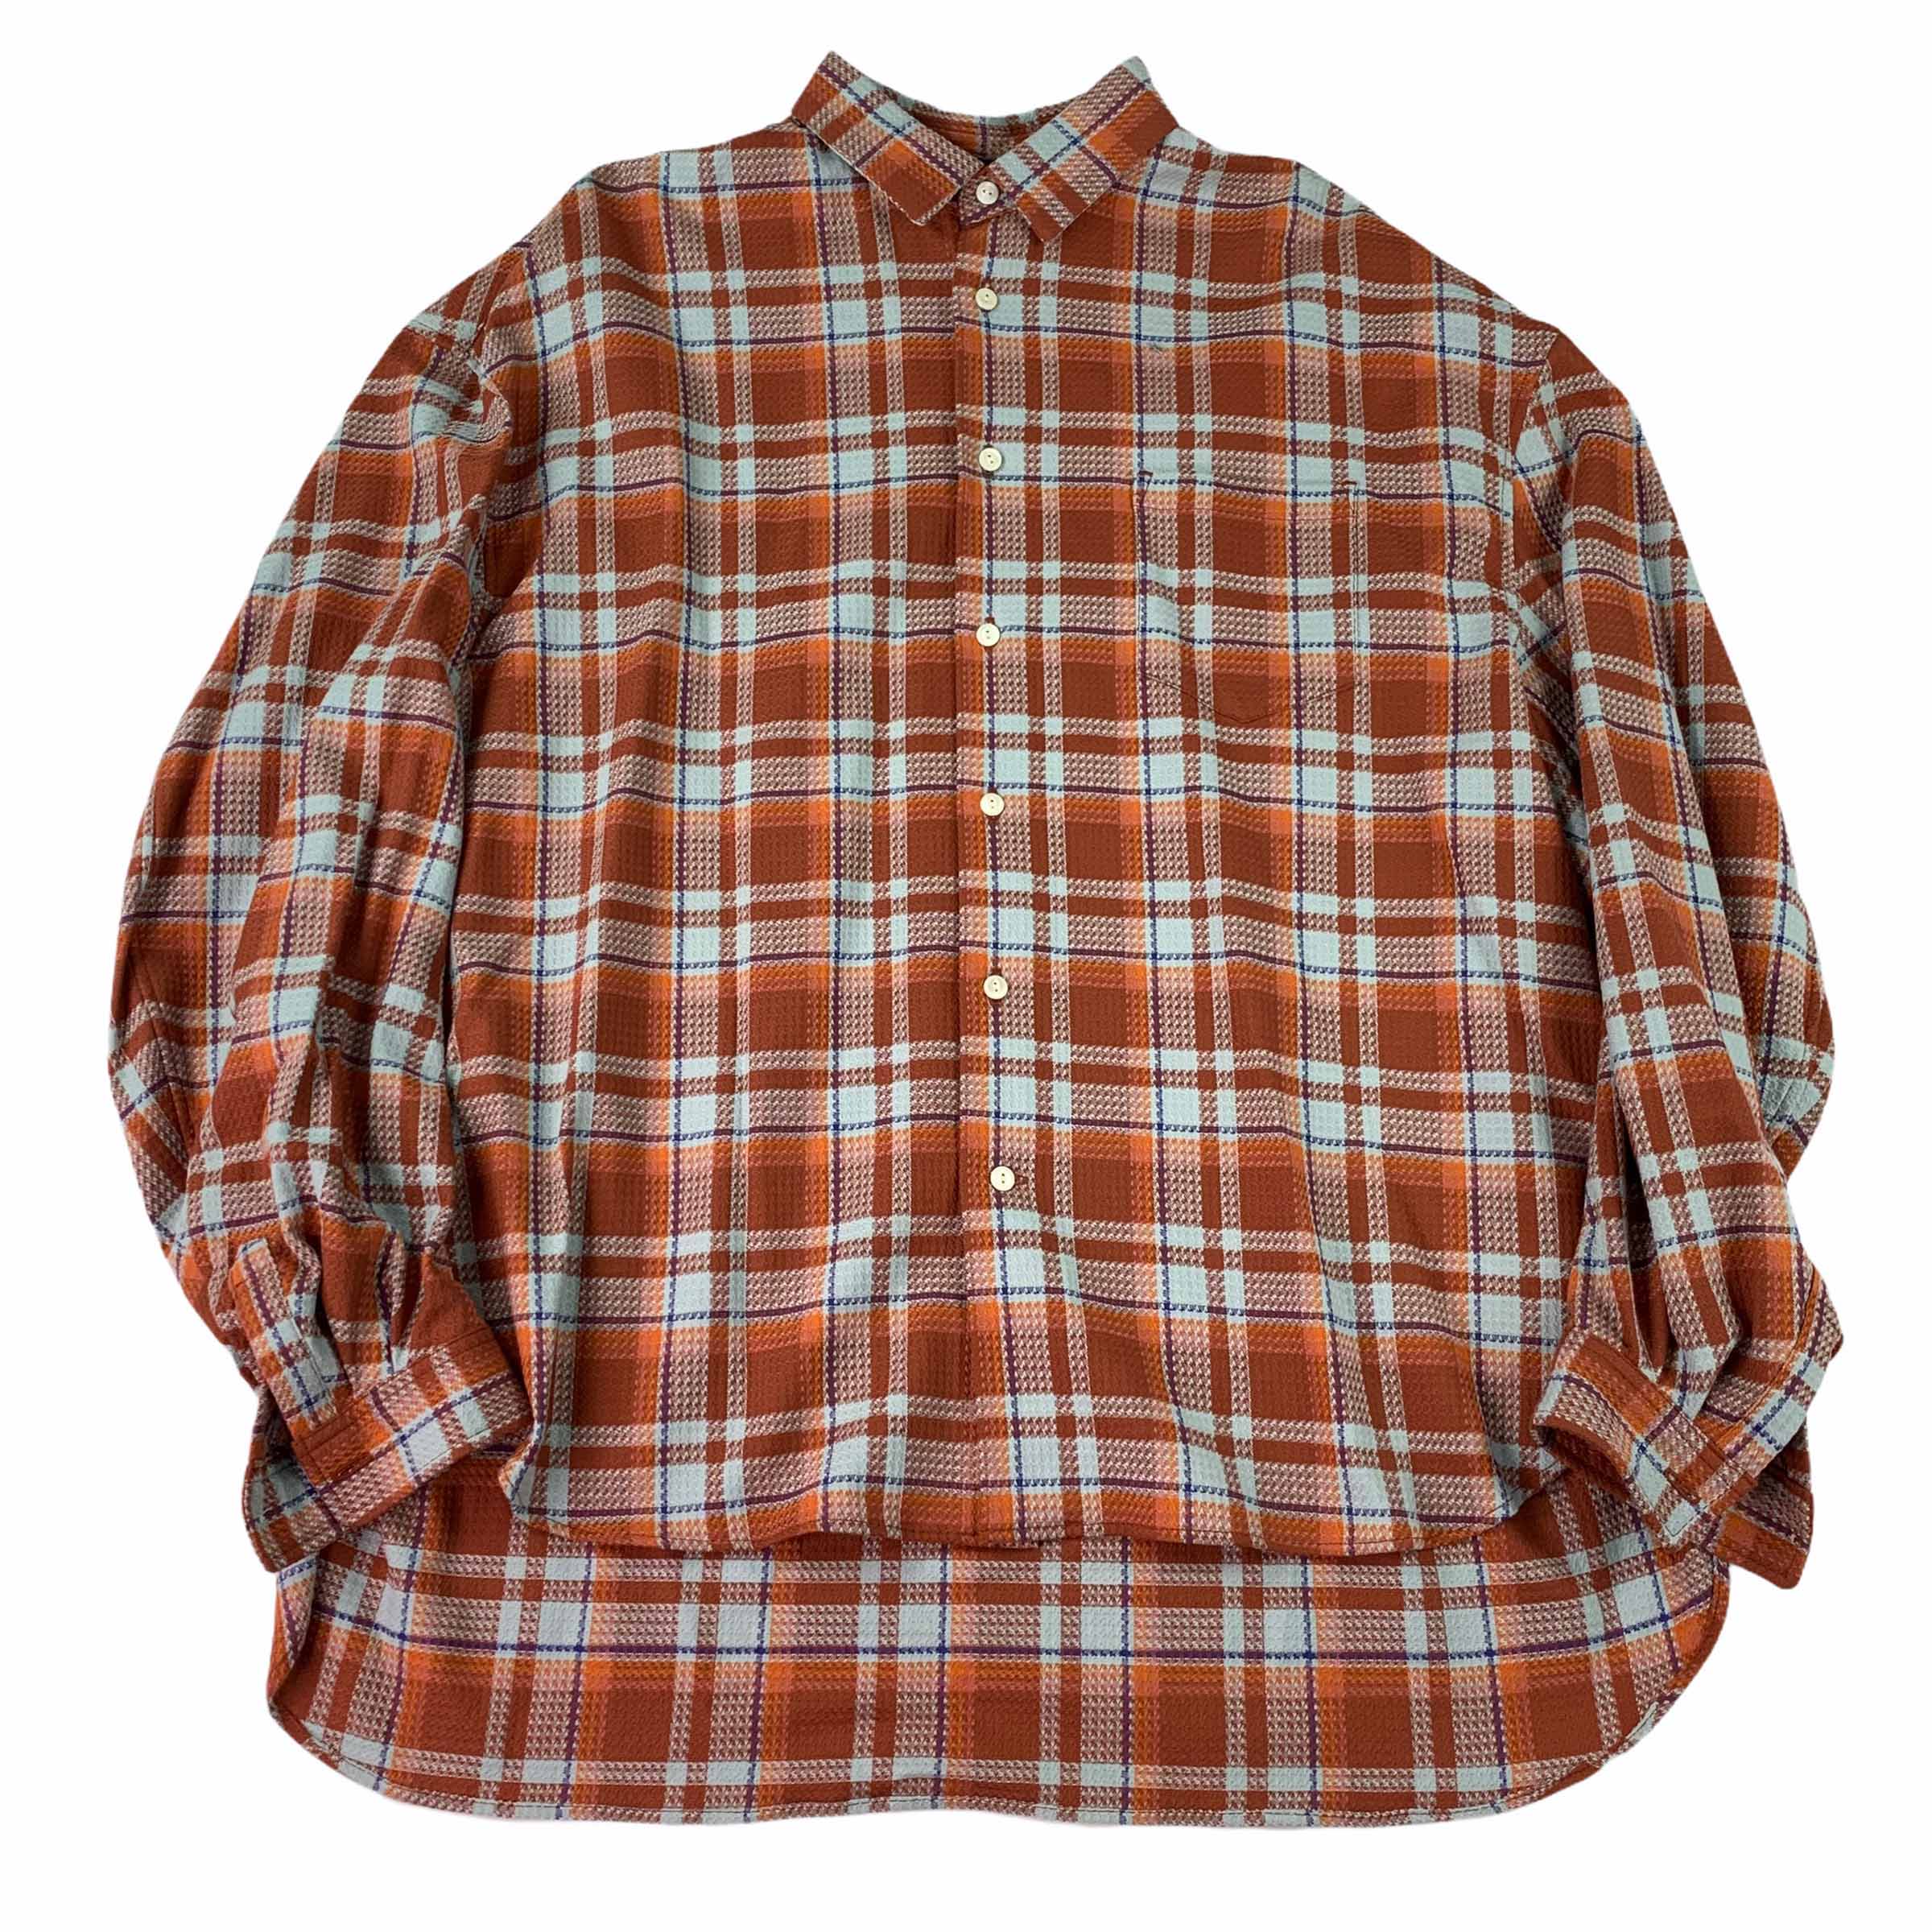 [Name] Orange Check Shirt - Size 1